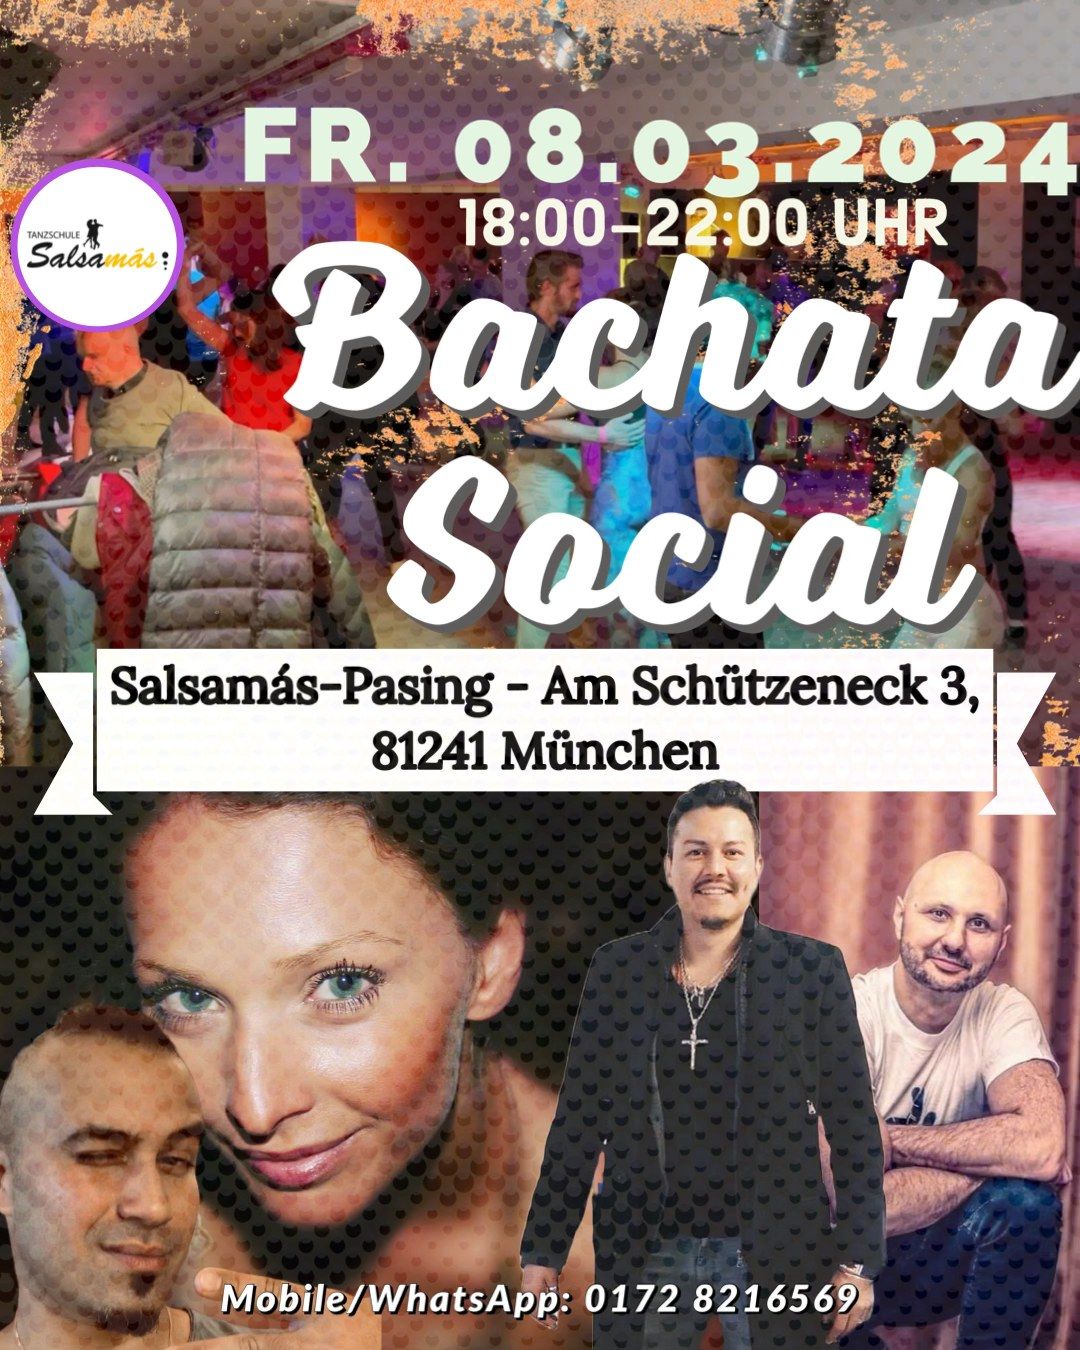 Bachata Classes & Social Dance Evening